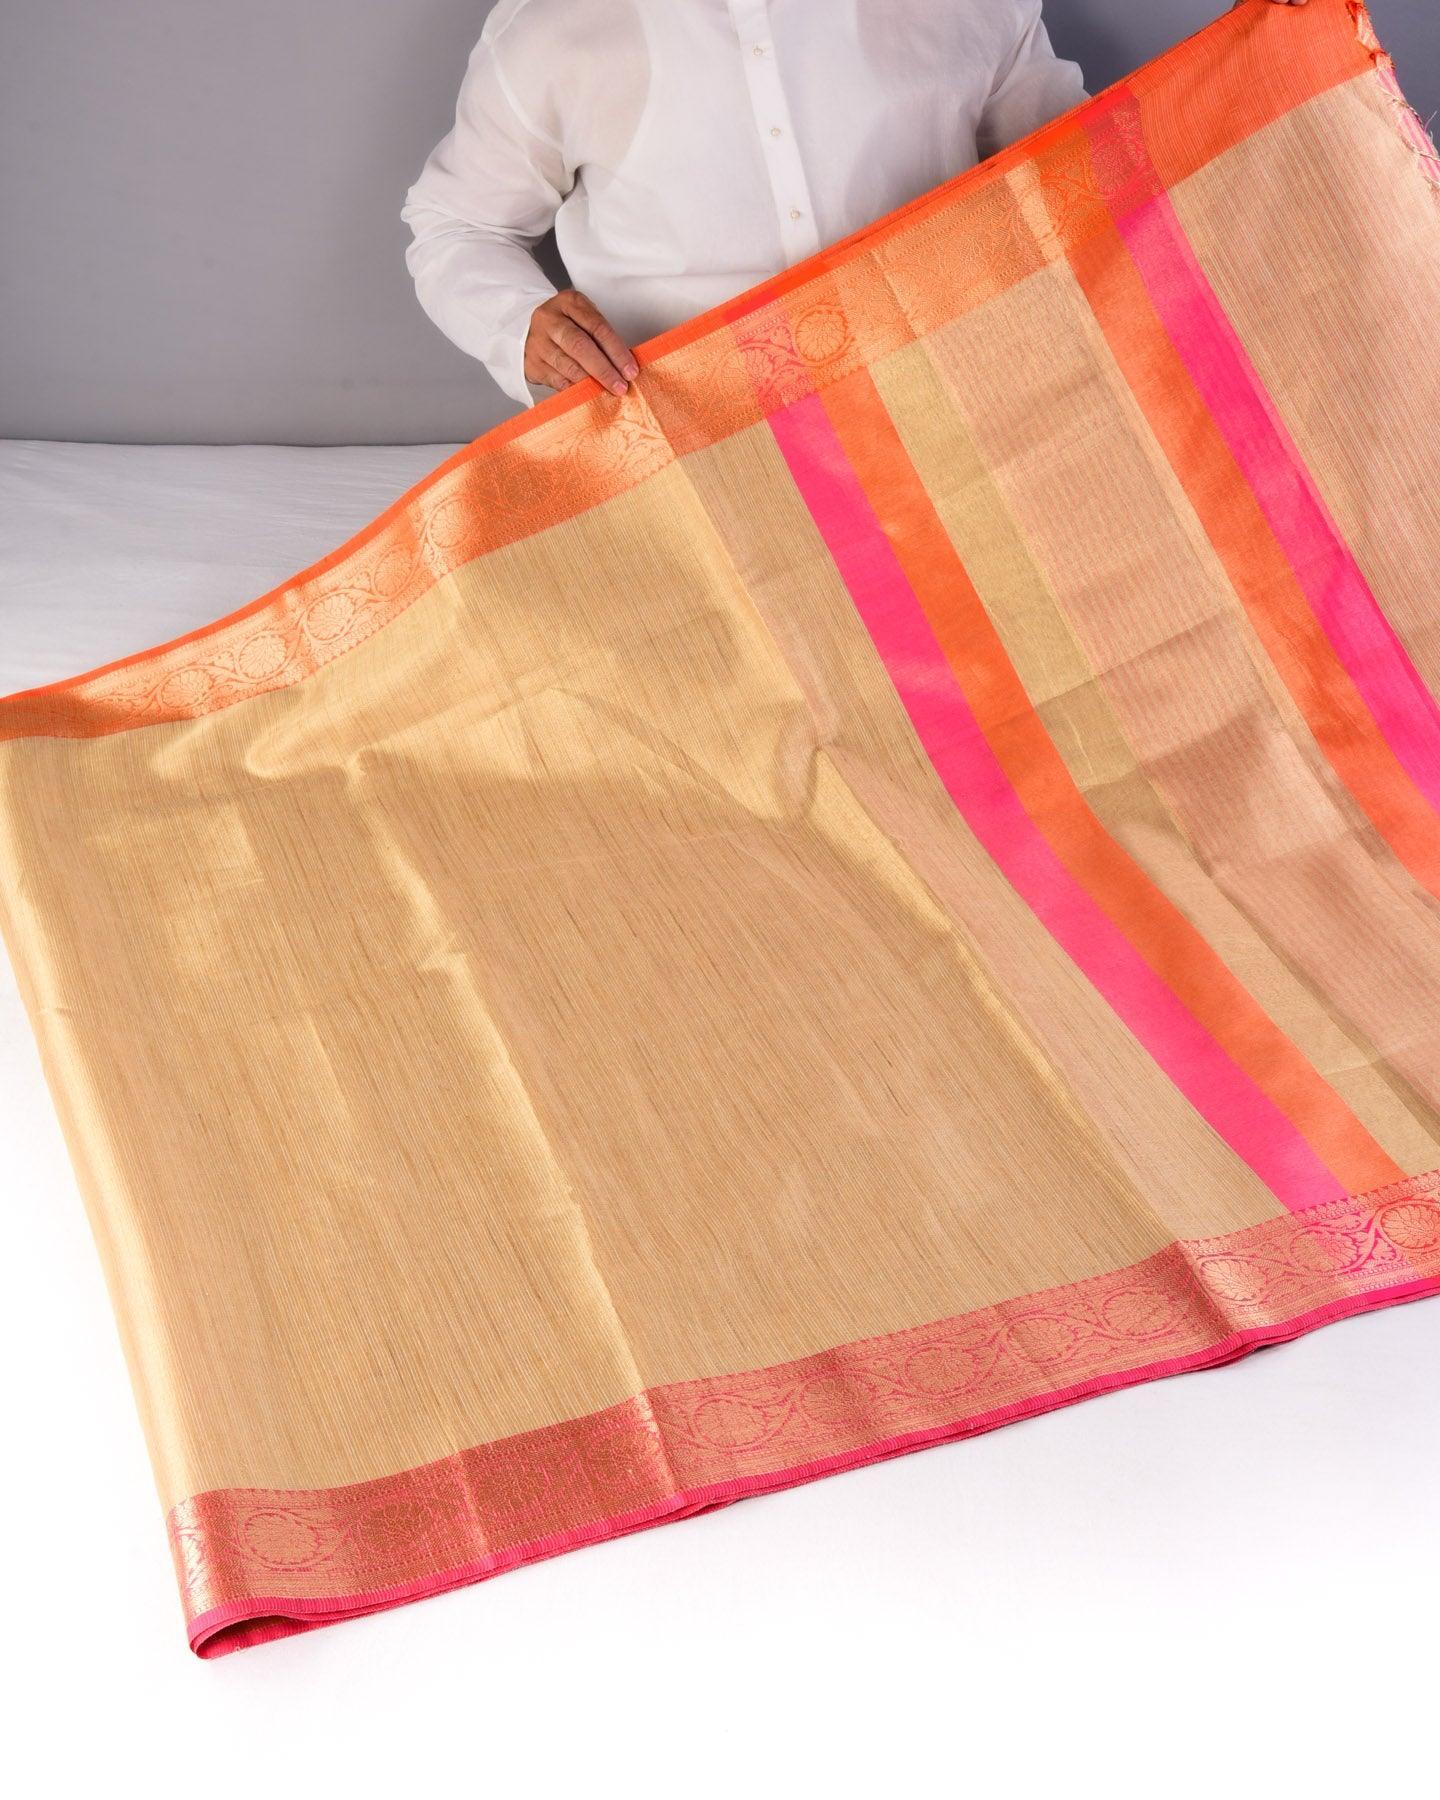 Golden Beige Banarasi Brocade Woven Cotton Tissue Saree - By HolyWeaves, Benares